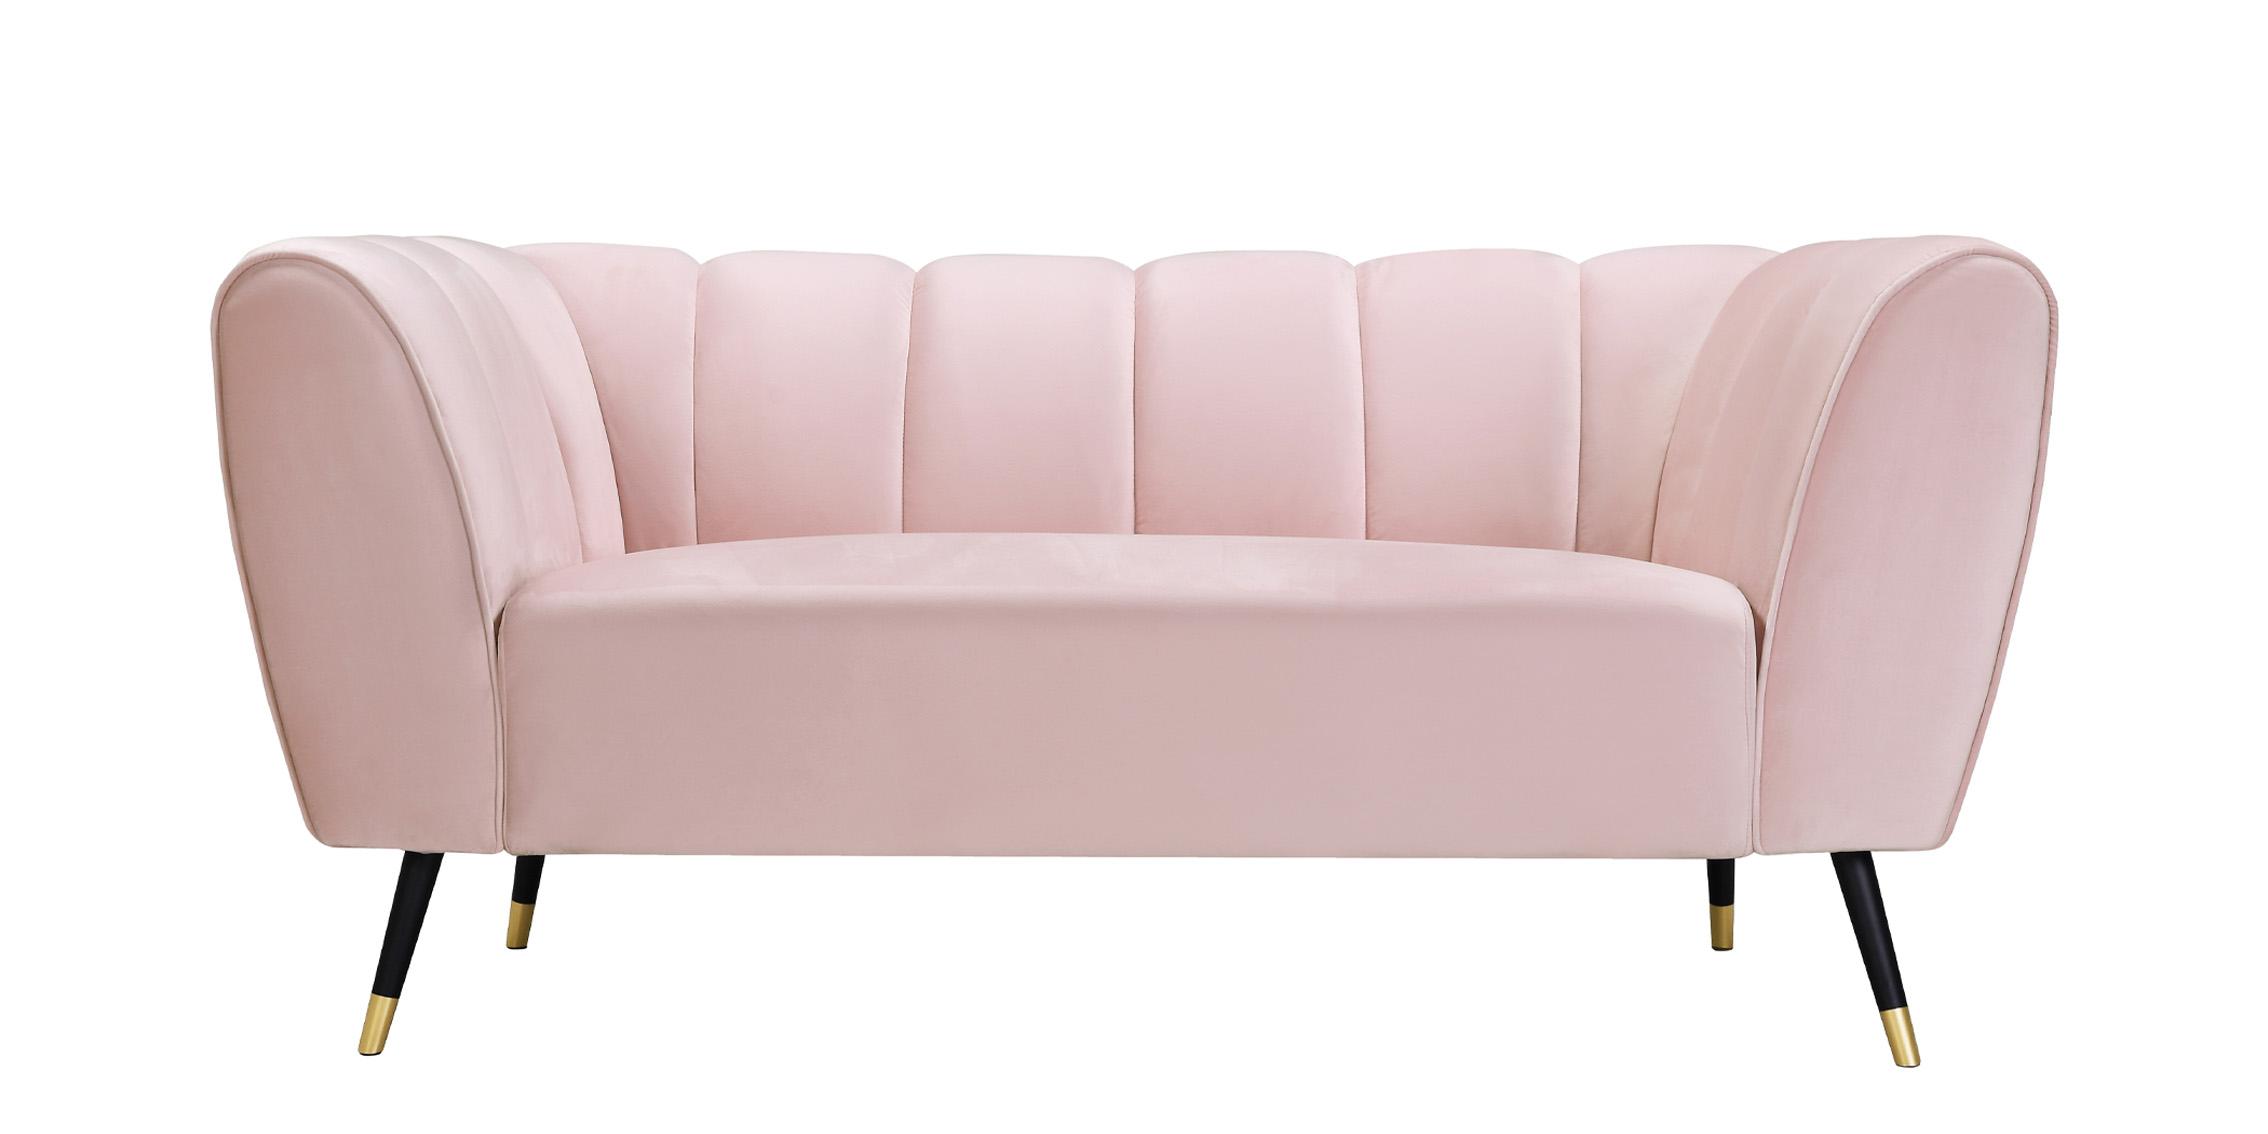 

    
626Pink-S-Set-3 Pink Velvet Channel Tufted Sofa Set 3Pcs BEAUMONT 626Pink Meridian Contemporary
